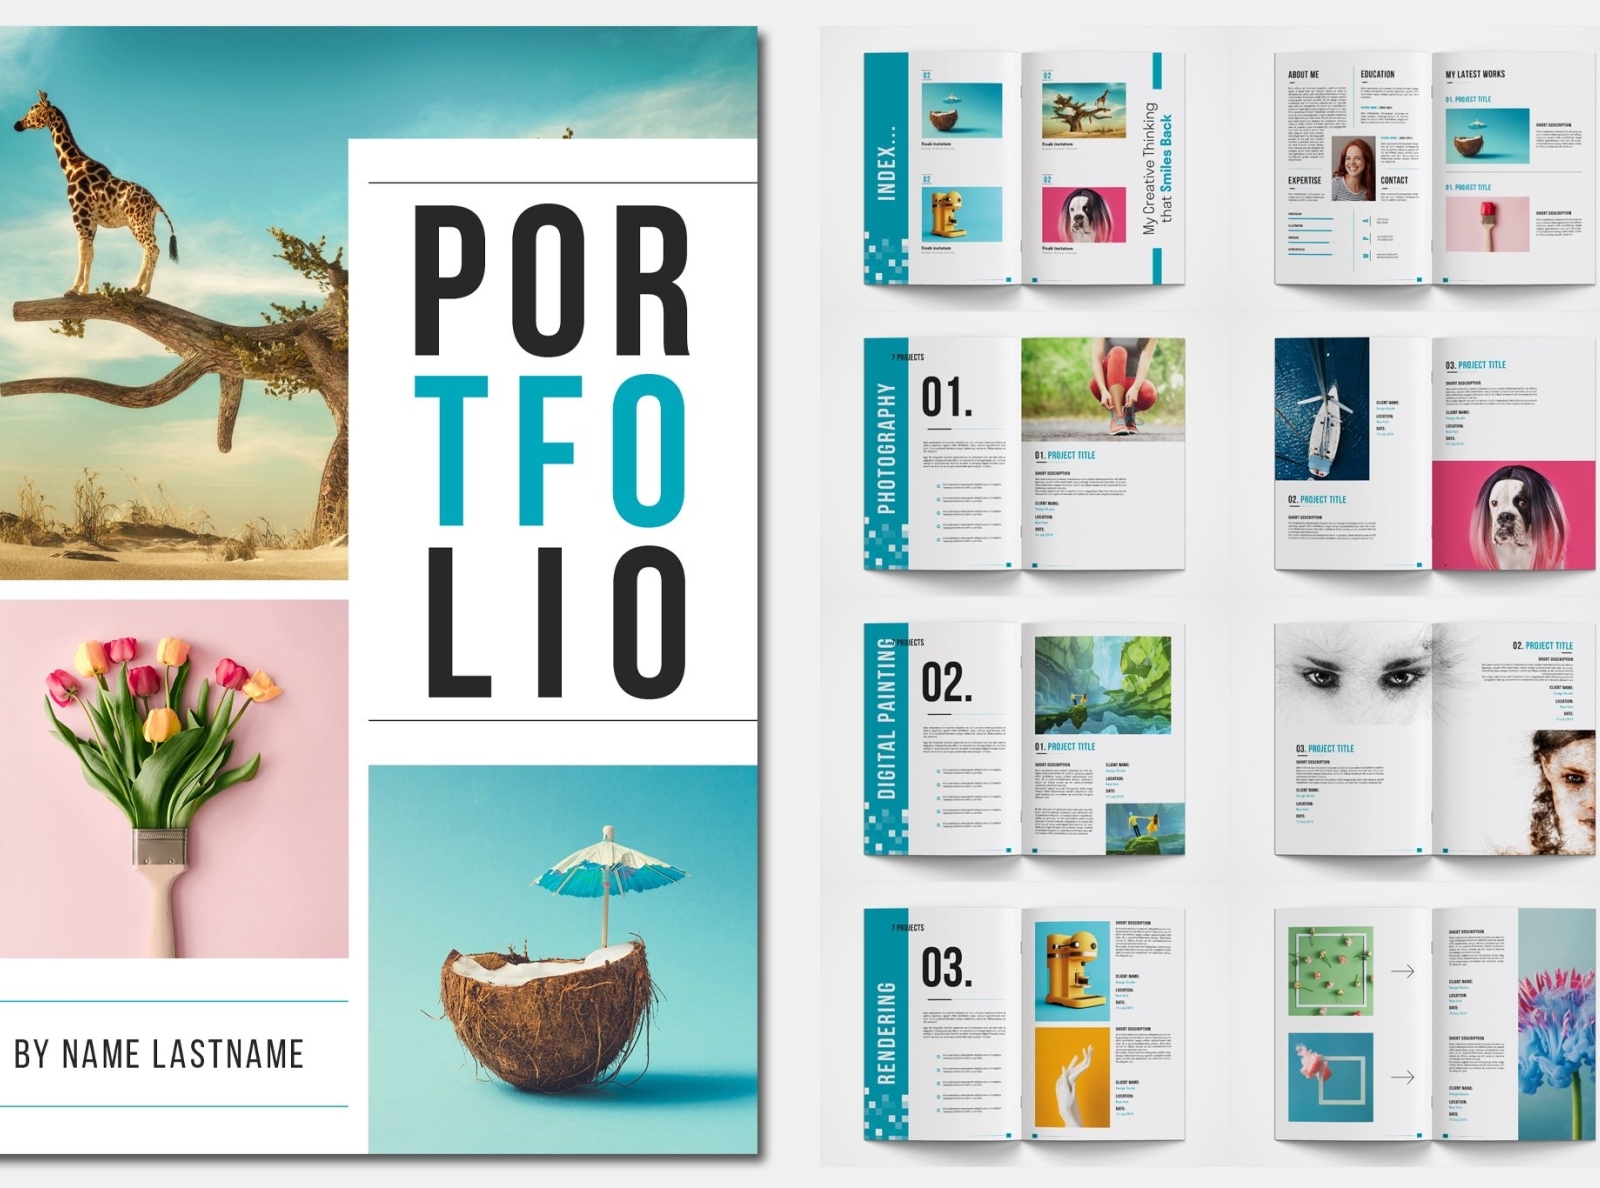 Graphic Design Portfolio Template by Brochure Design on Dribbble